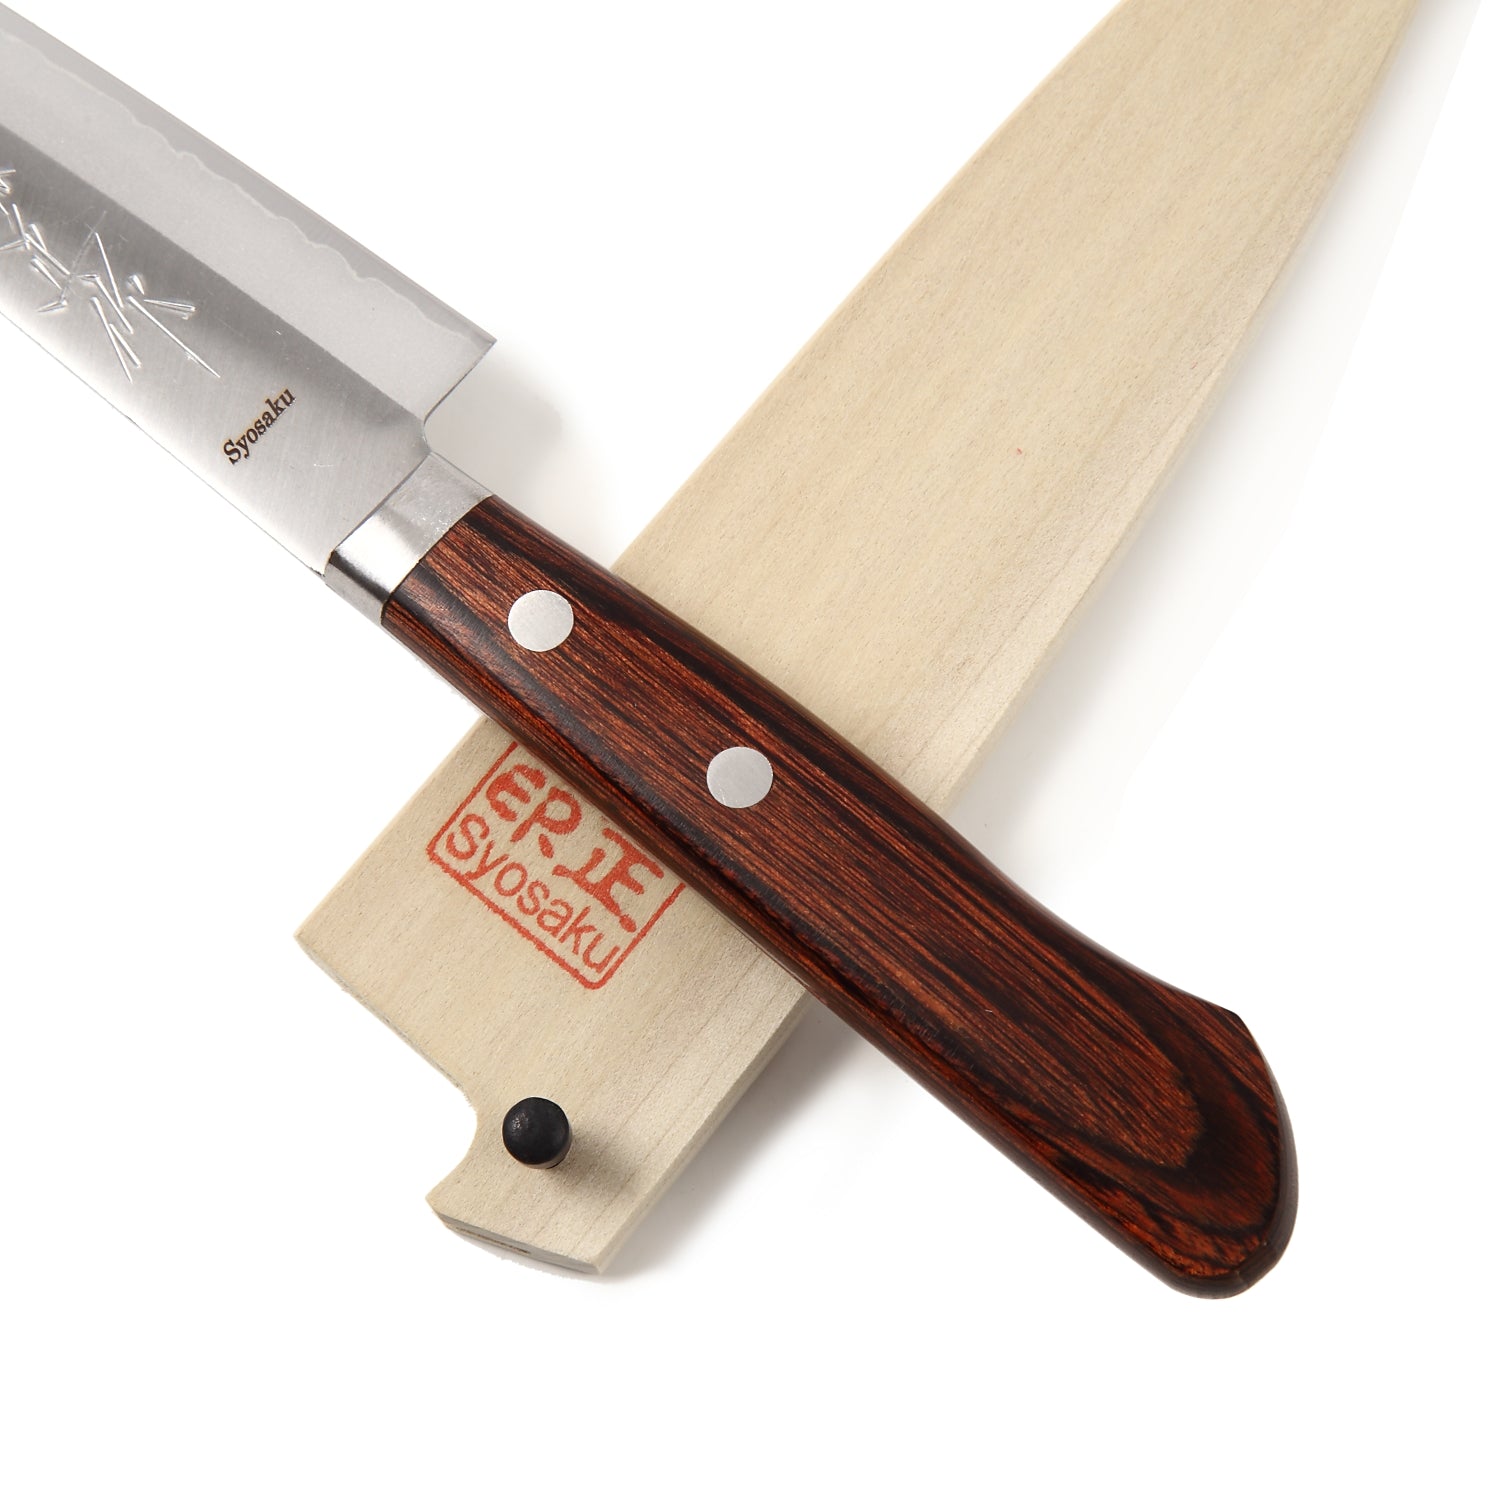 Syosaku Japanese Petty Best Sharp Kitchen Chef Knife VG-1 Gold Stainless Steel Mahogany Handle, 5.3-inch (135mm) with Magnolia Wood Sheath Saya Cover - Syosaku-Japan